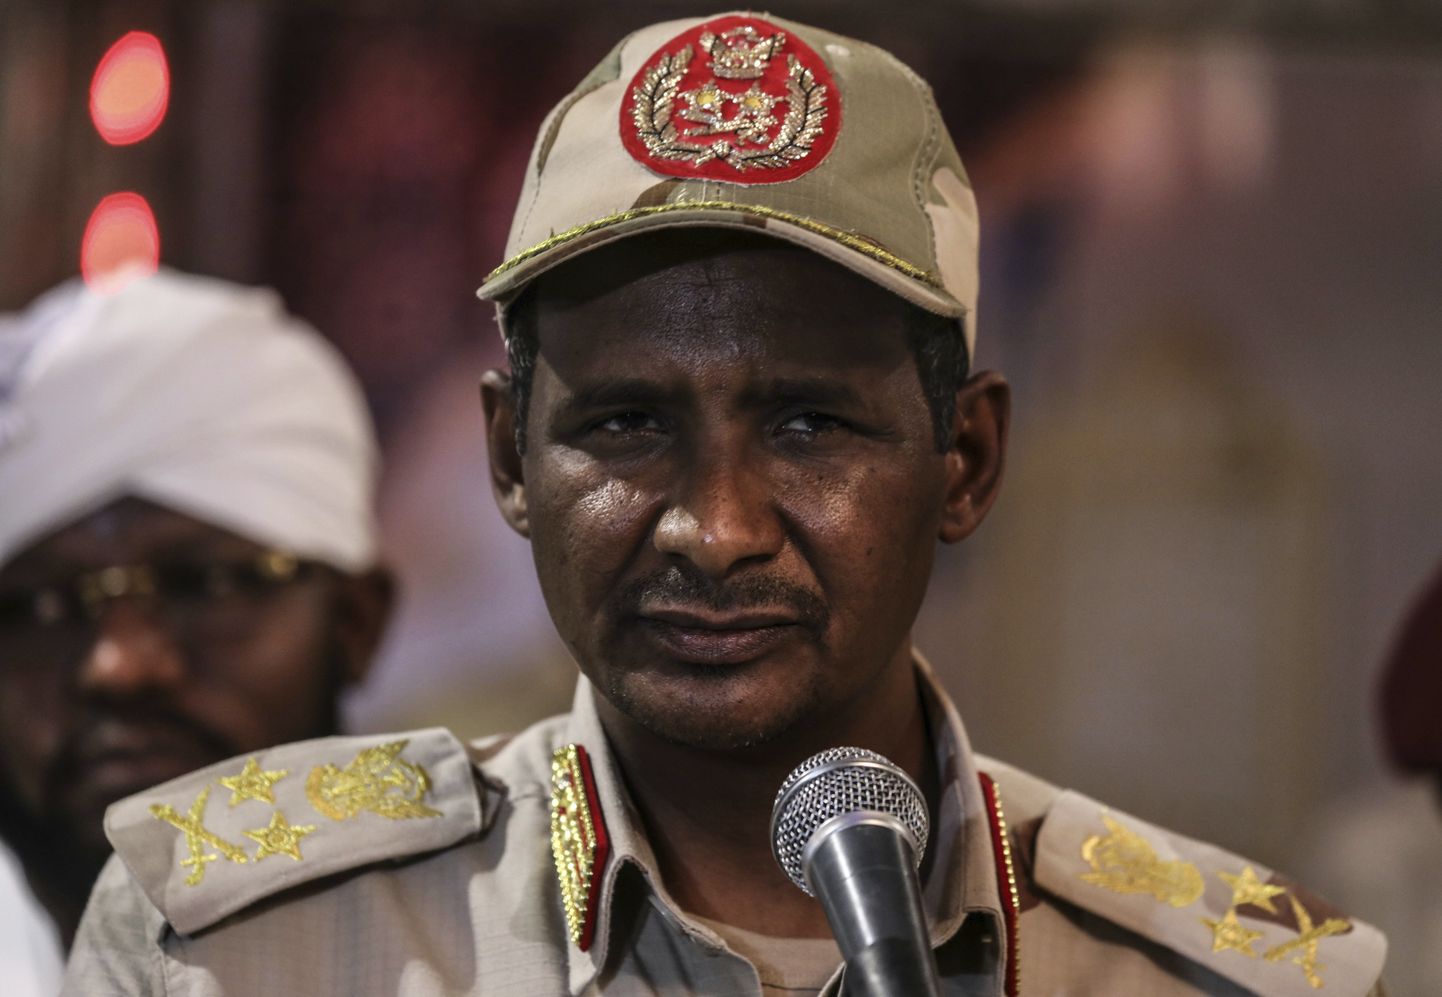 Sudaani valitseva sõjaväenõukogu asejuht kindral Mohammed Hamdan Dagalo.